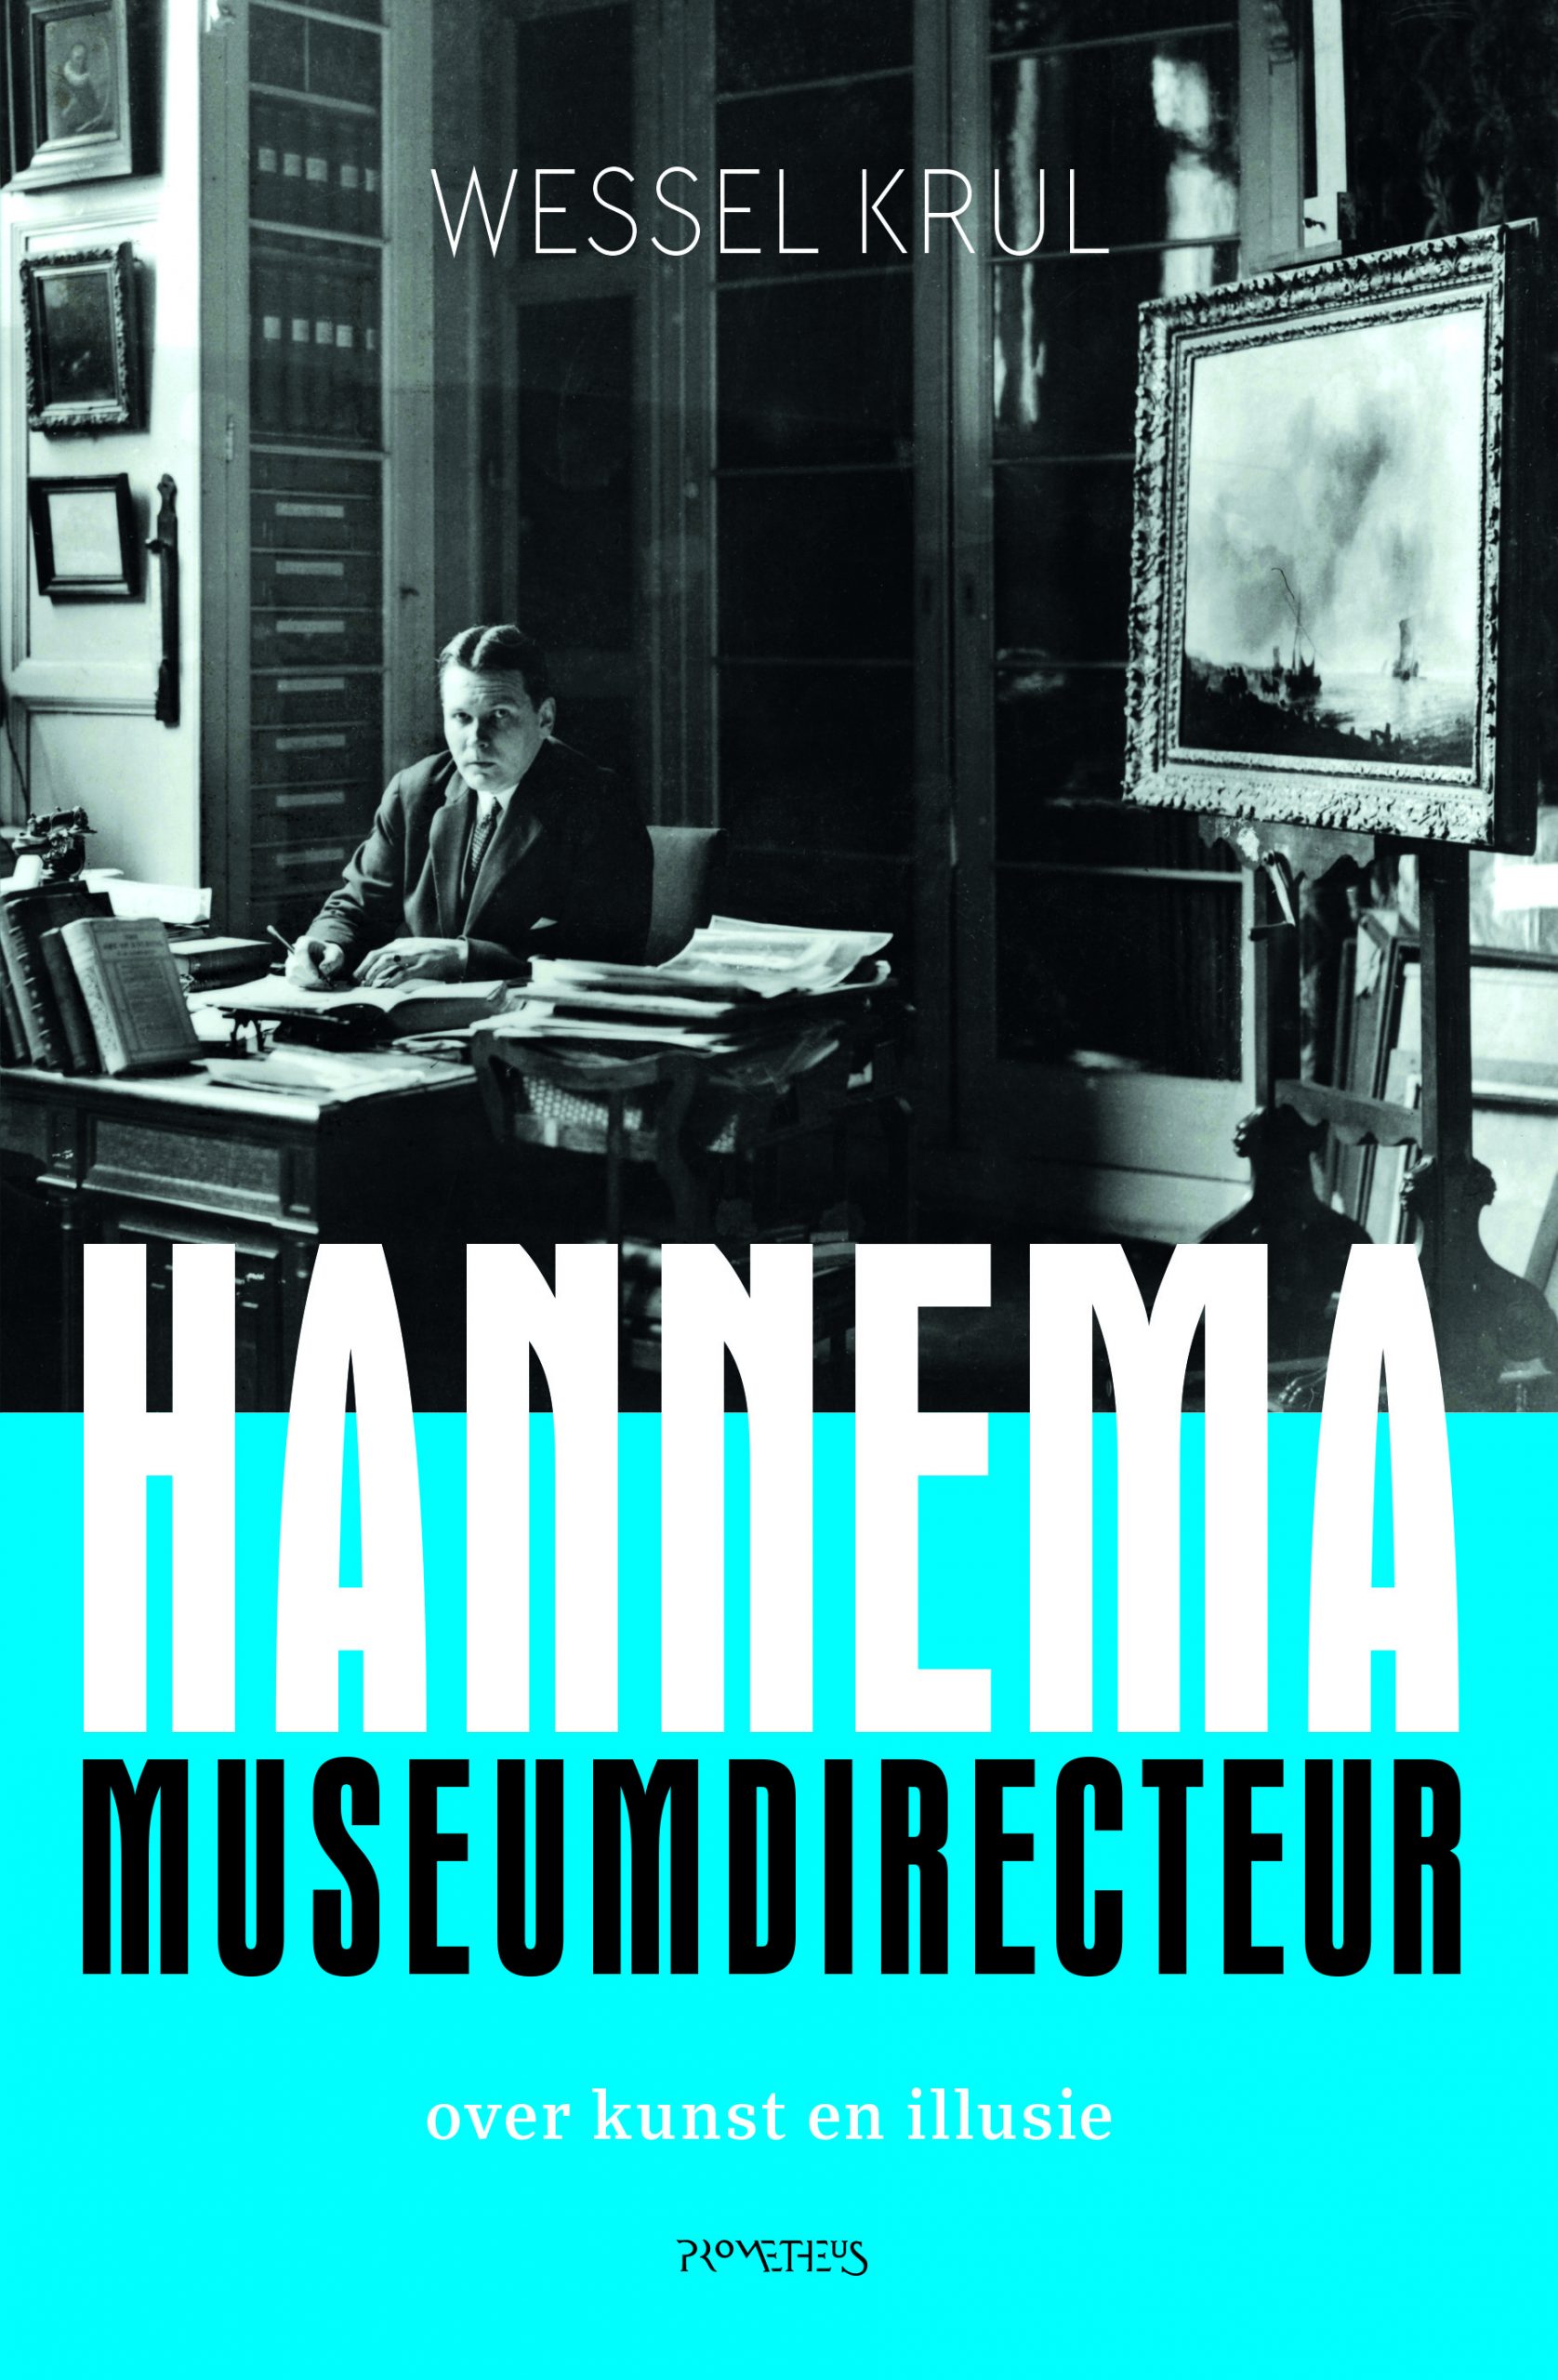 Krul - Hannema museumdirecteur@1.indd